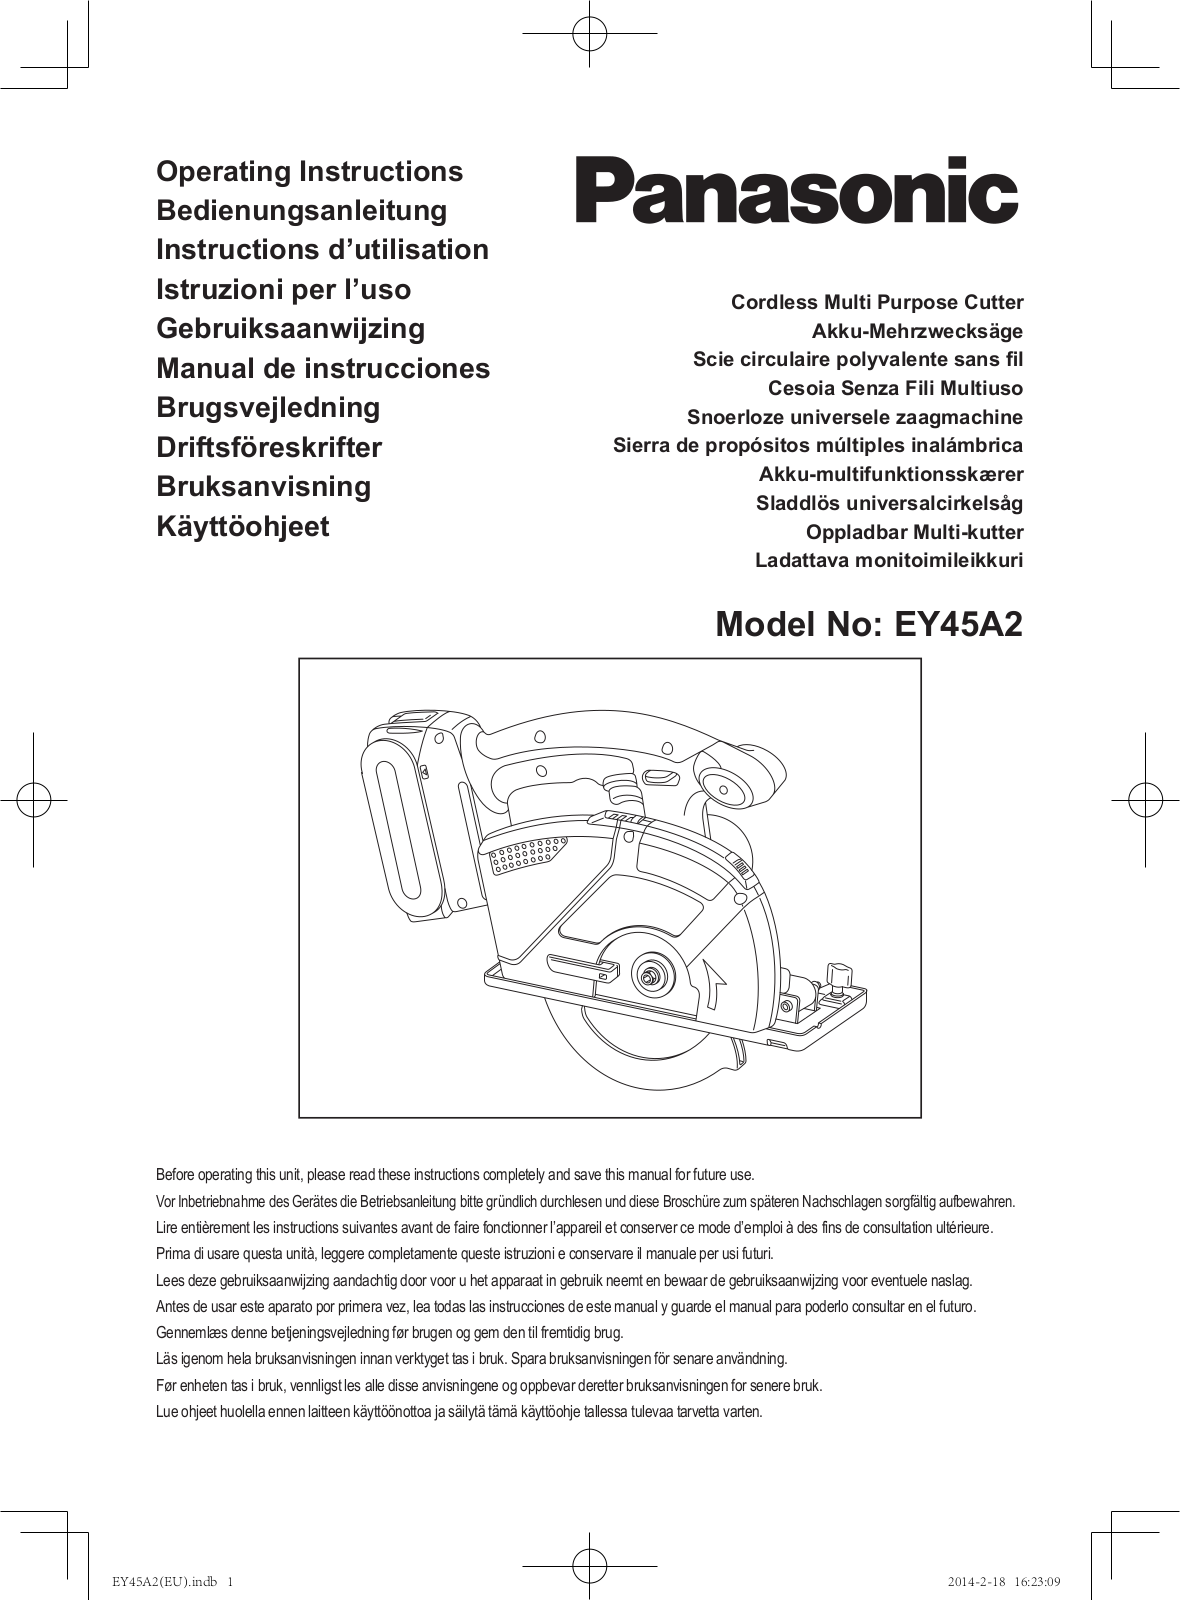 Panasonic EY45A2 User Manual